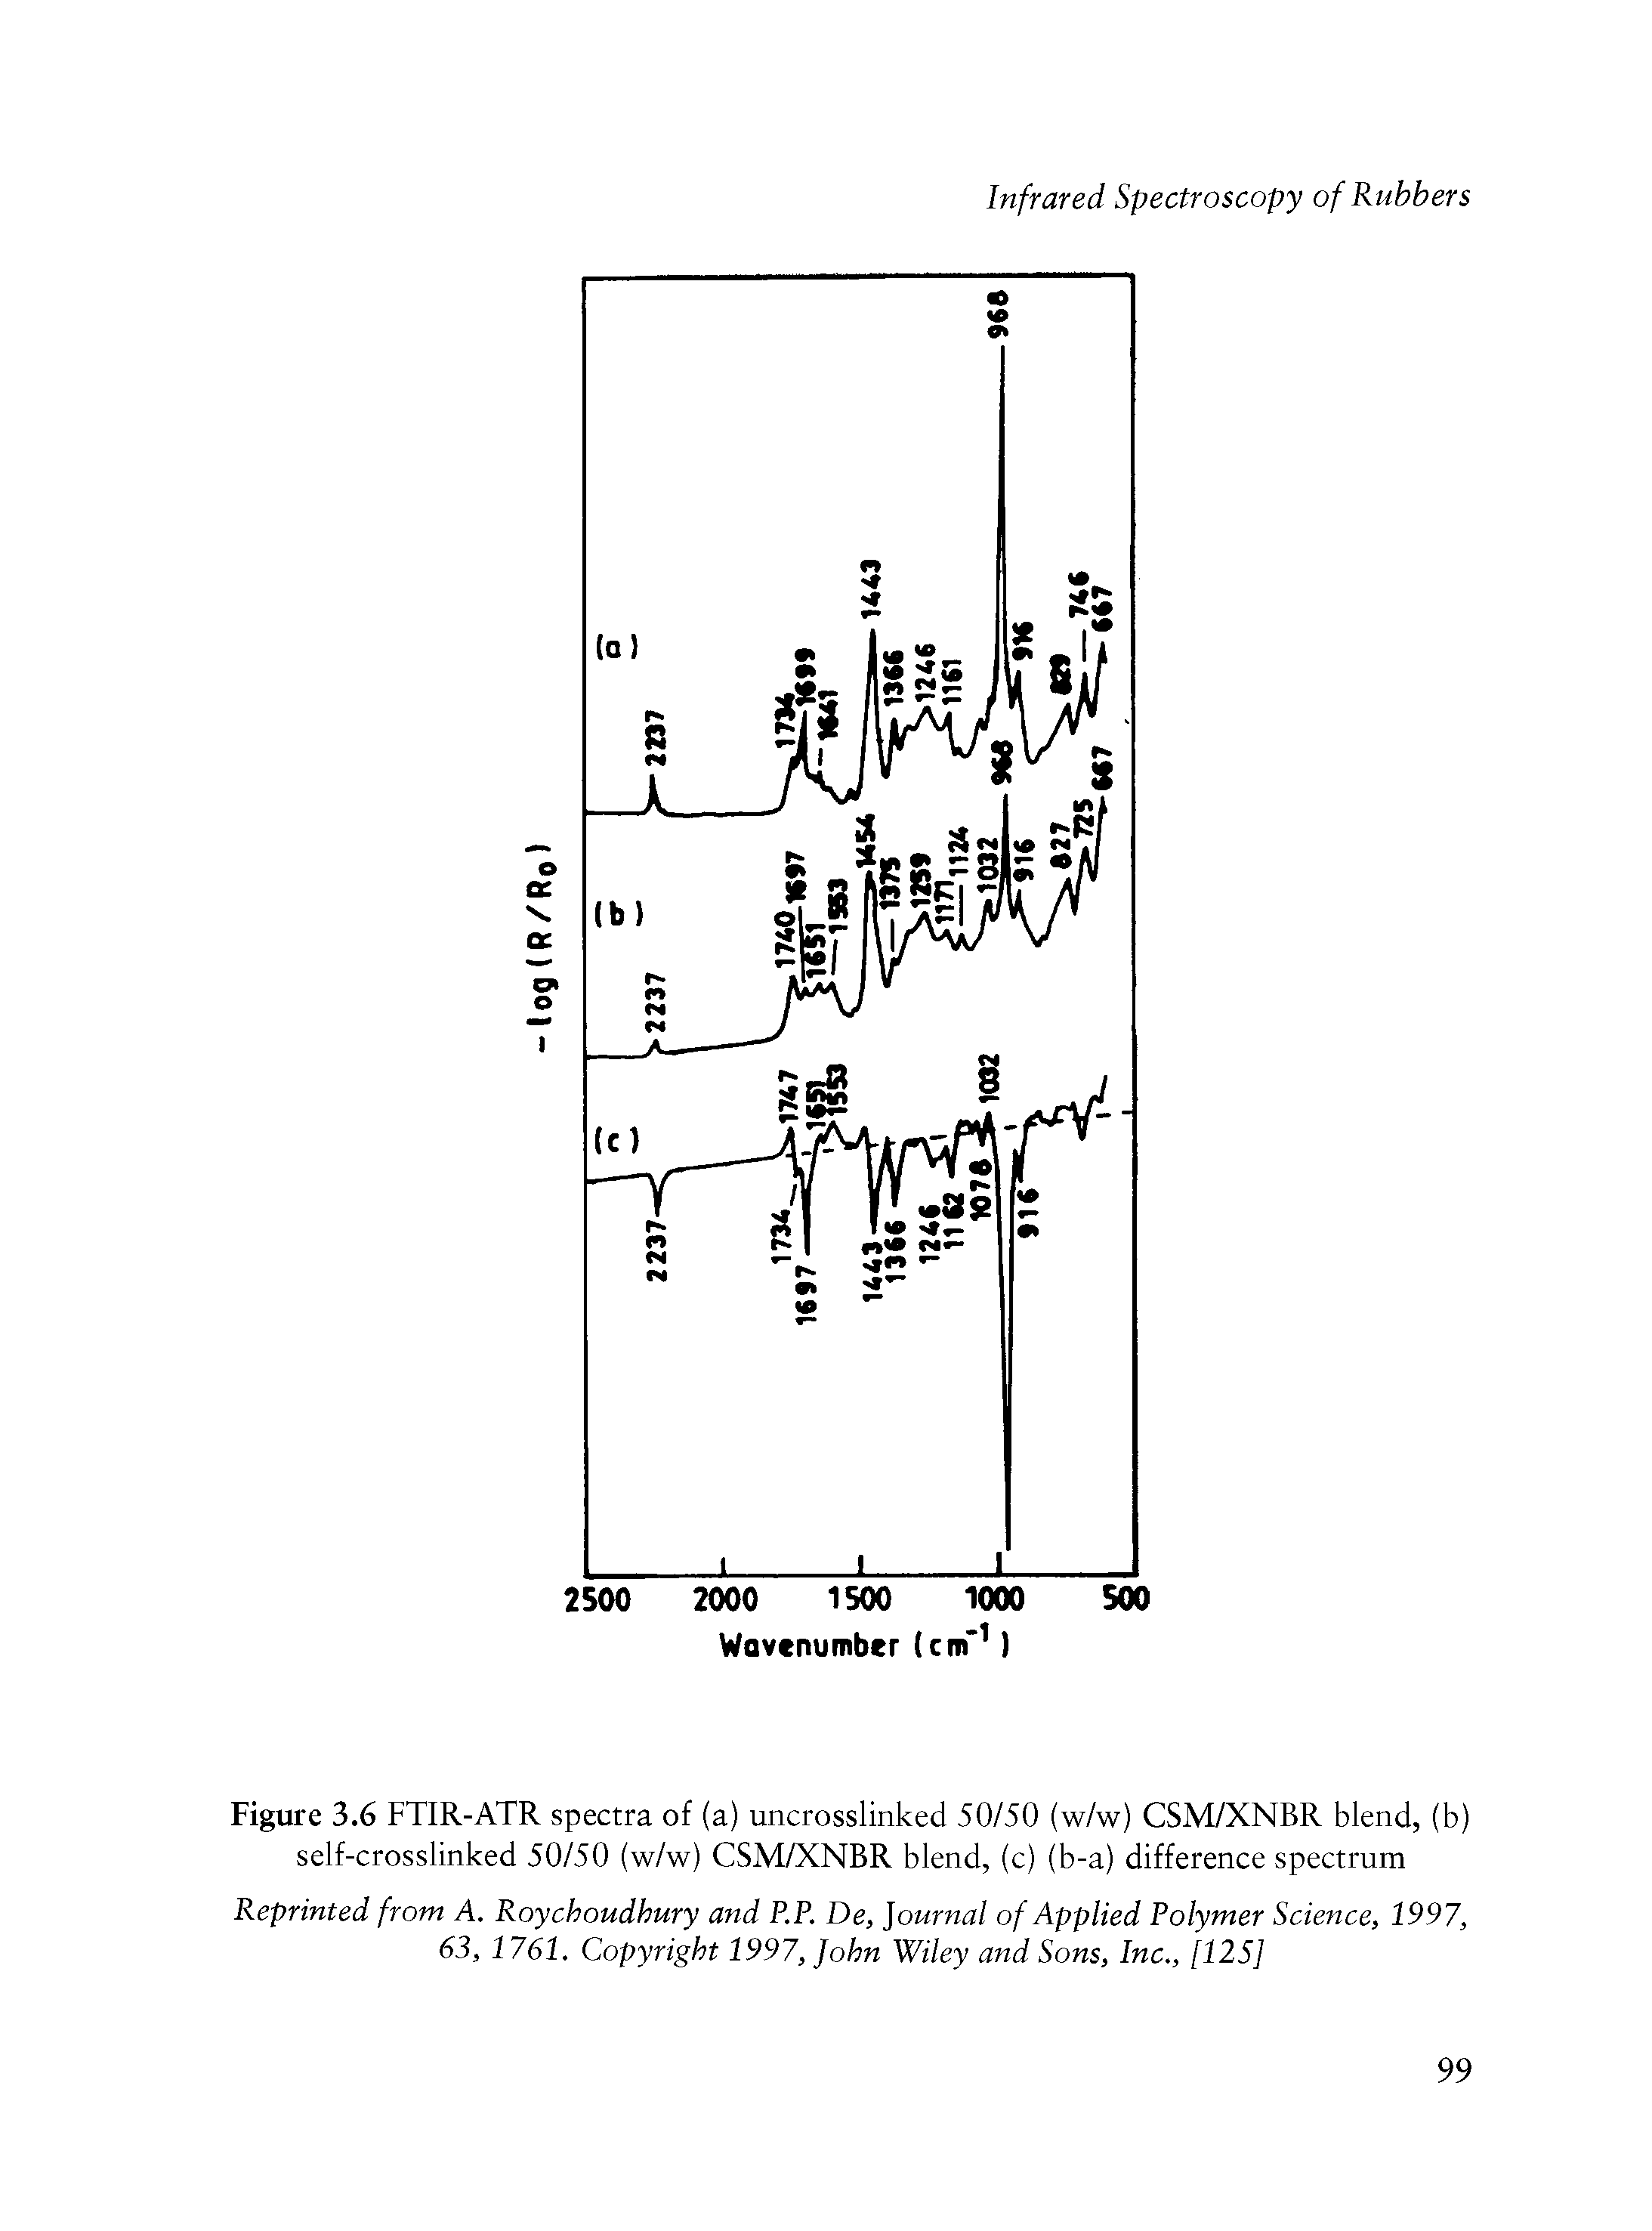 Figure 3.6 FTIR-ATR spectra of (a) uncrosslinked 50/50 (w/w) CSM/XNBR blend, (b) self-crosslinked 50/50 (w/w) CSM/XNBR blend, (c) (b-a) difference spectrum...